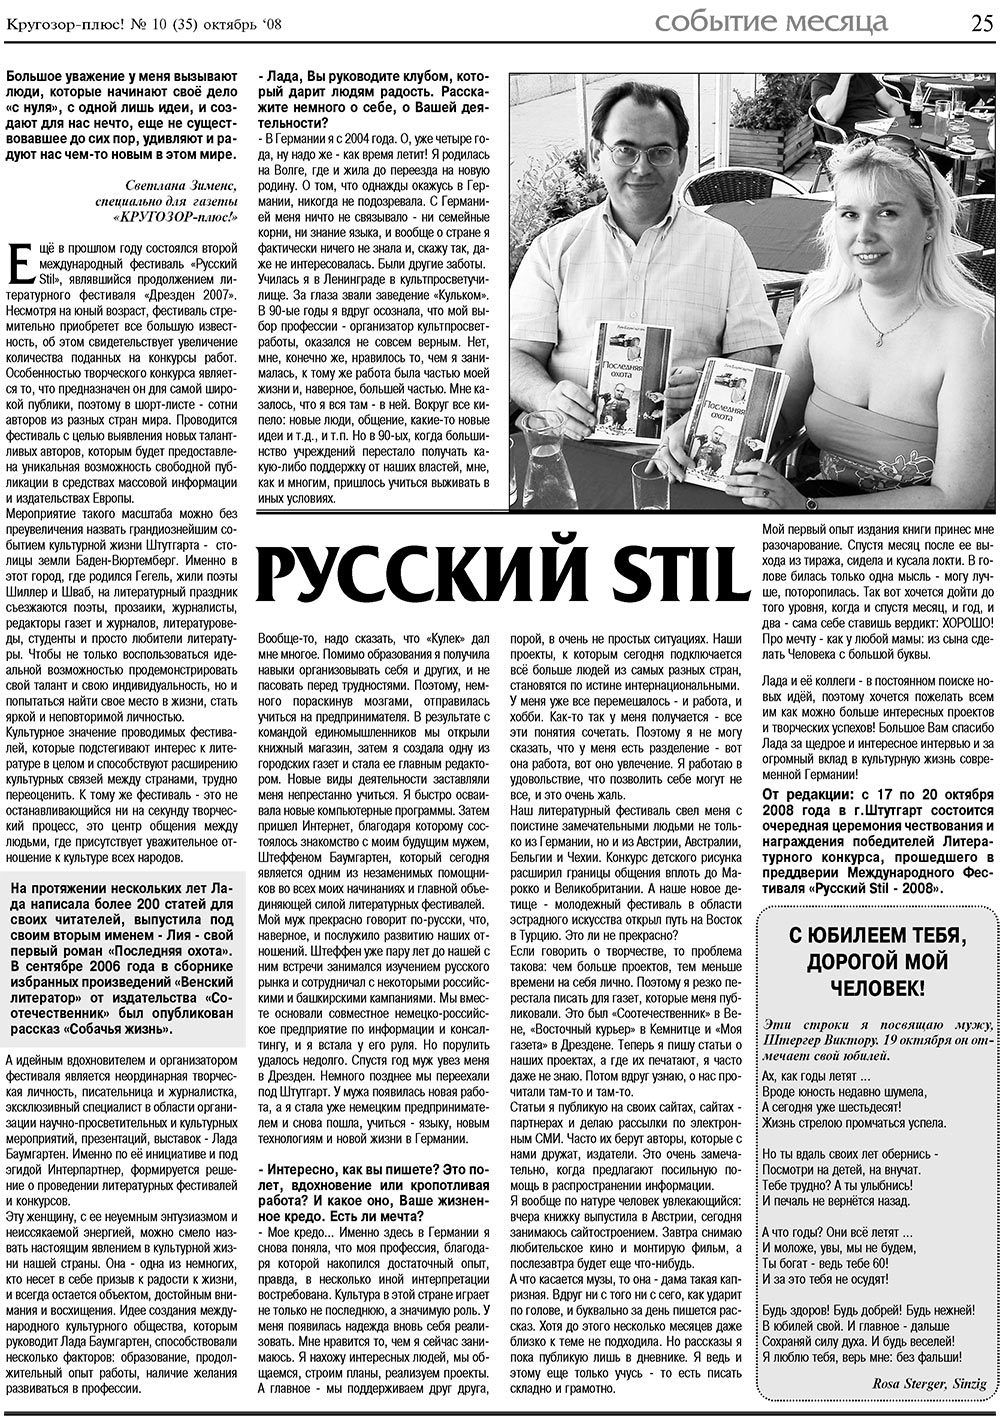 Кругозор плюс! (газета). 2008 год, номер 10, стр. 25